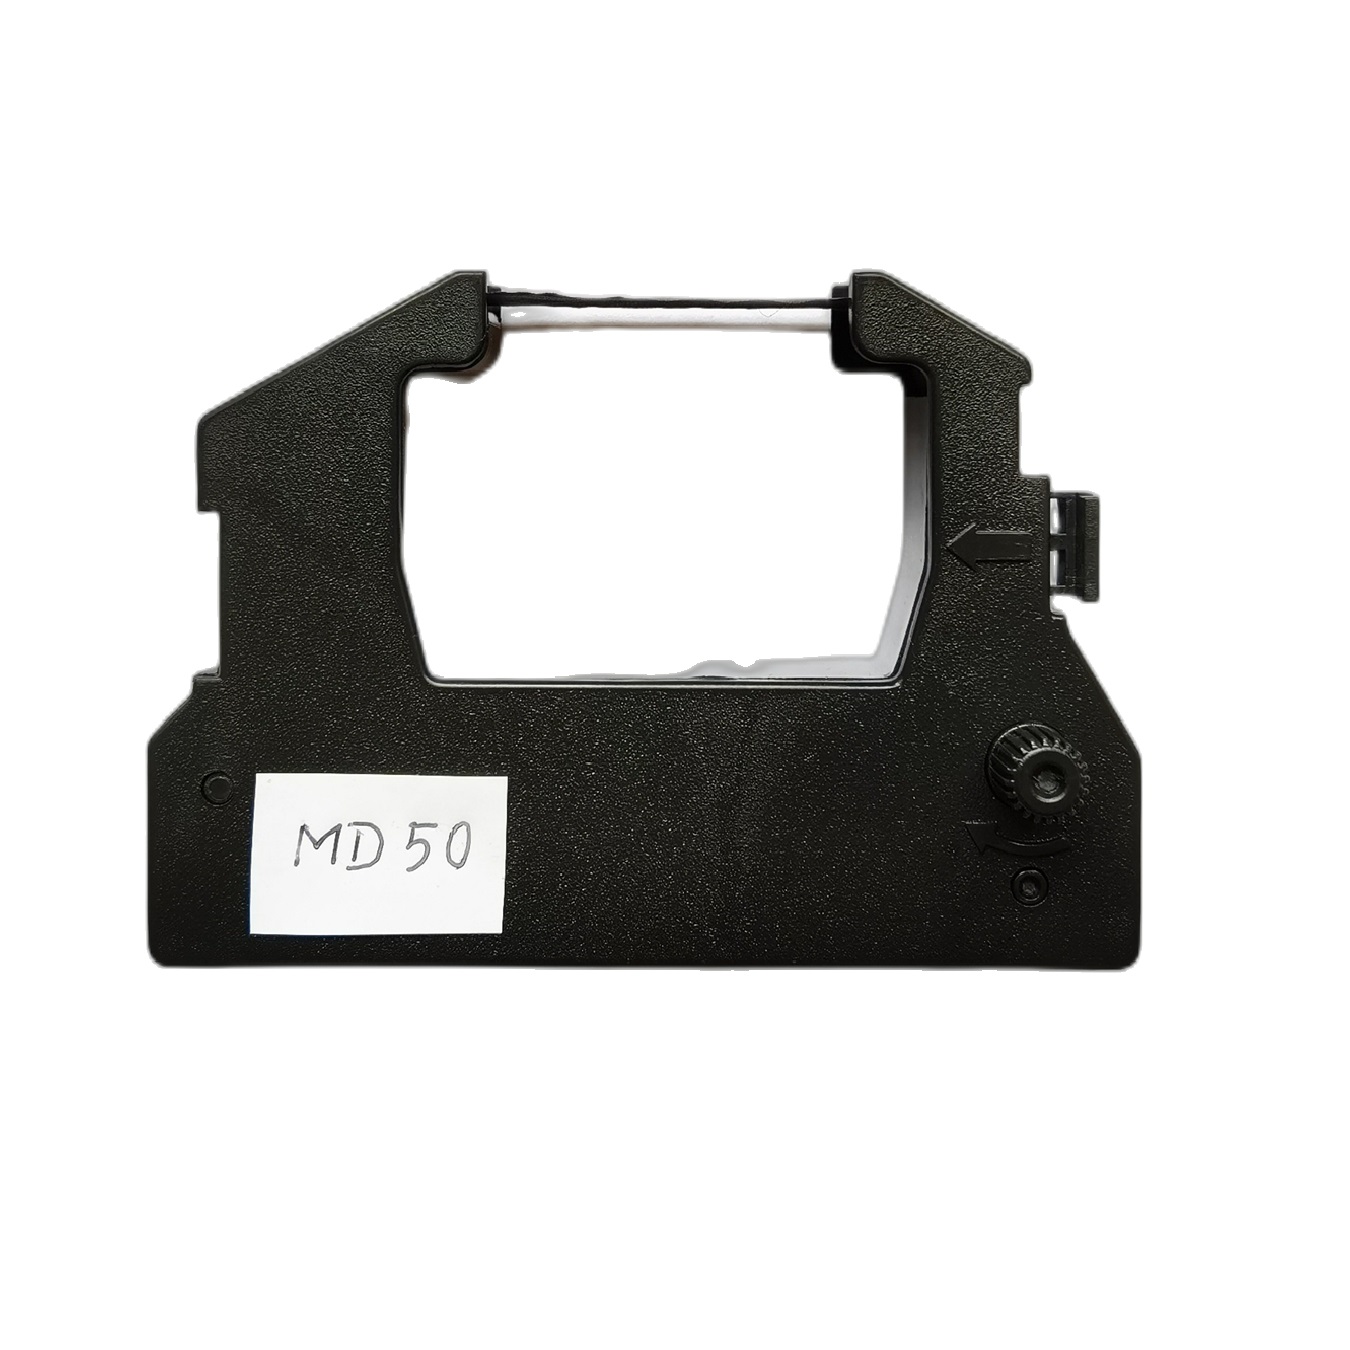 MD50 色带适用于安卡MDcare 封口机MD880 MD860 系列的内部打印机